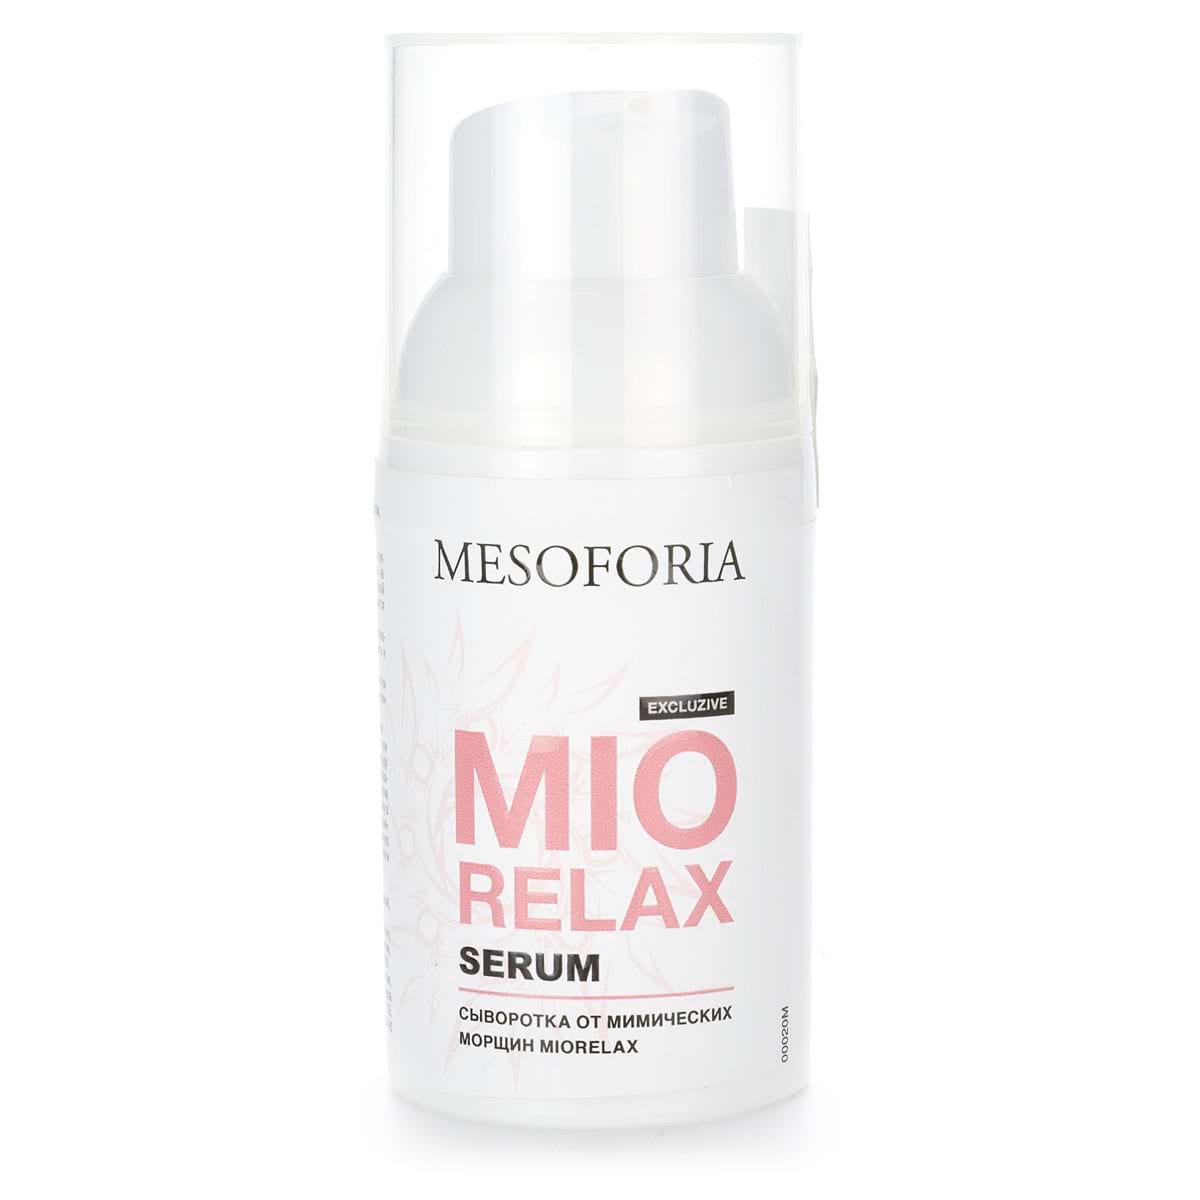 MIORELAX Serum / Сыворотка от мимических морщин MIORELAX, Mesoforia (Мезофория) – 30 мл